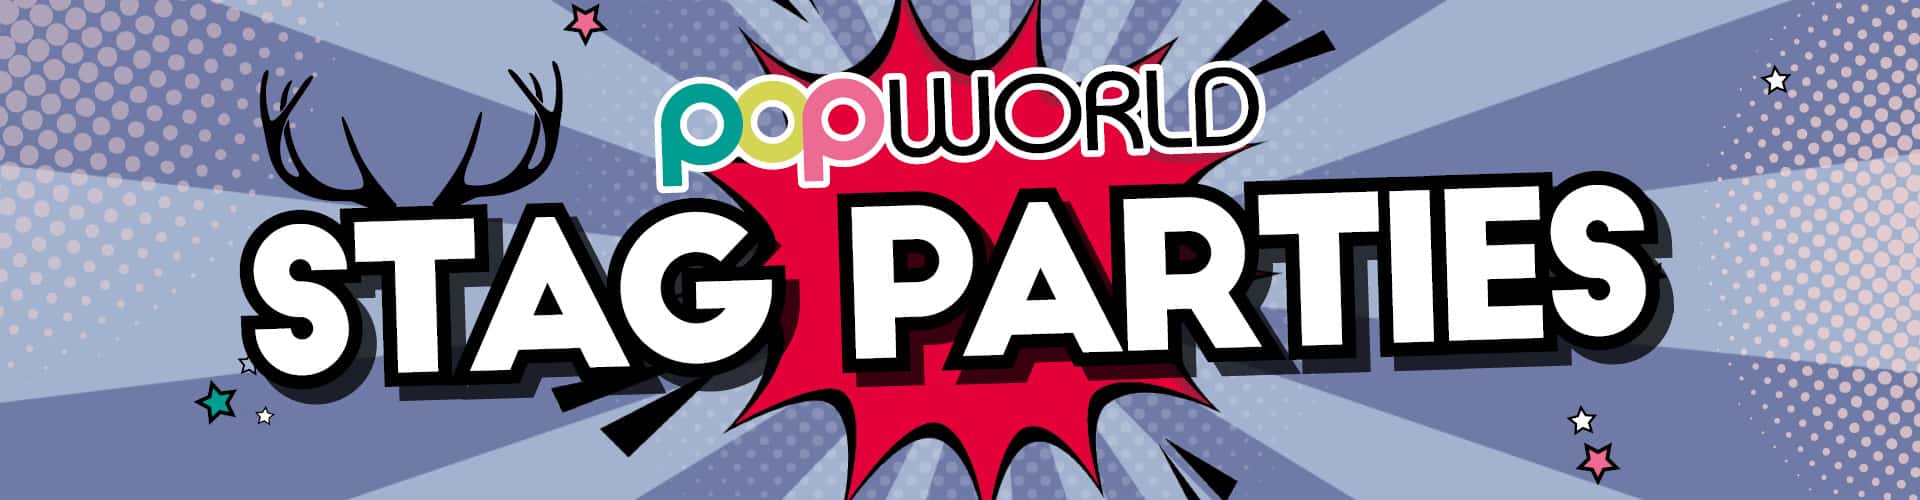 Stag Parties at Popworld & Zinc Weston-Super-Mare